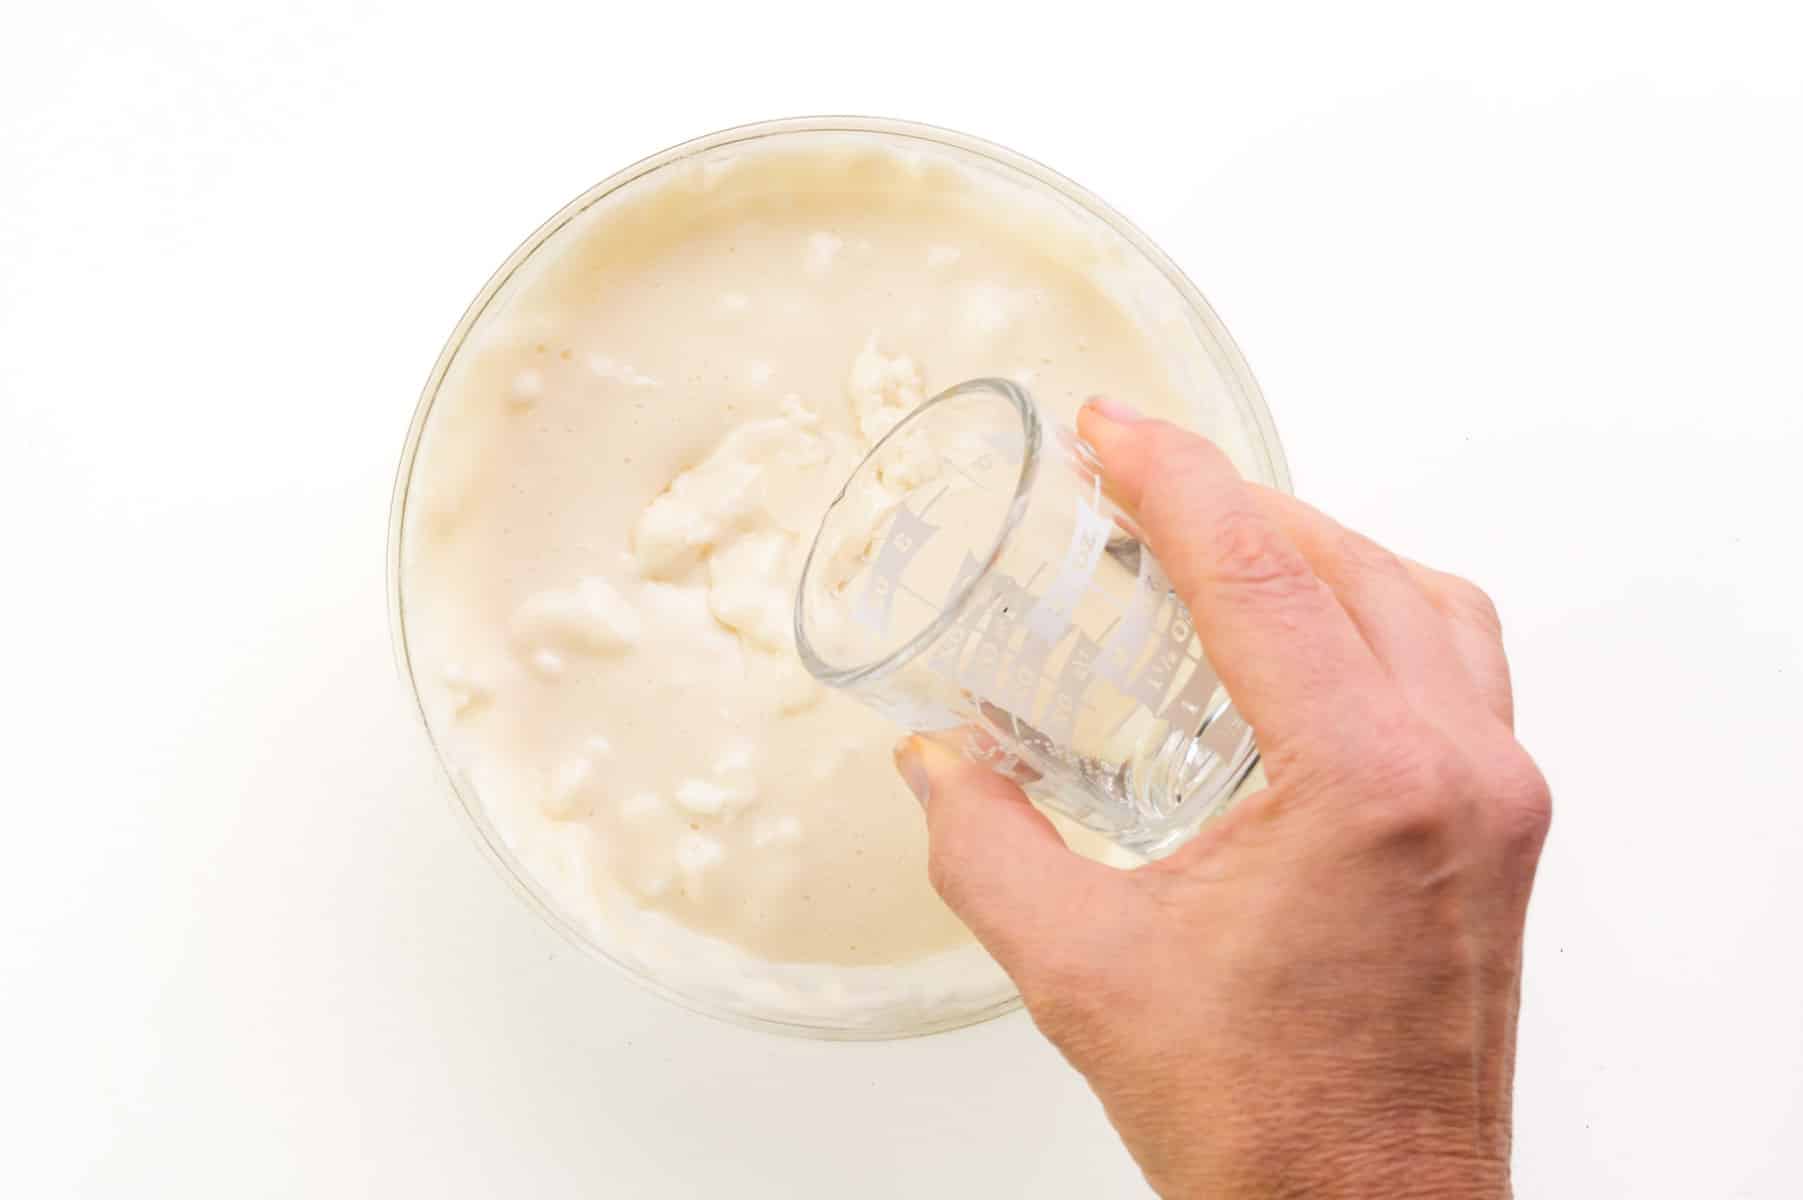 A hand pours crème de menthe into a bowl of melted marshmallows.